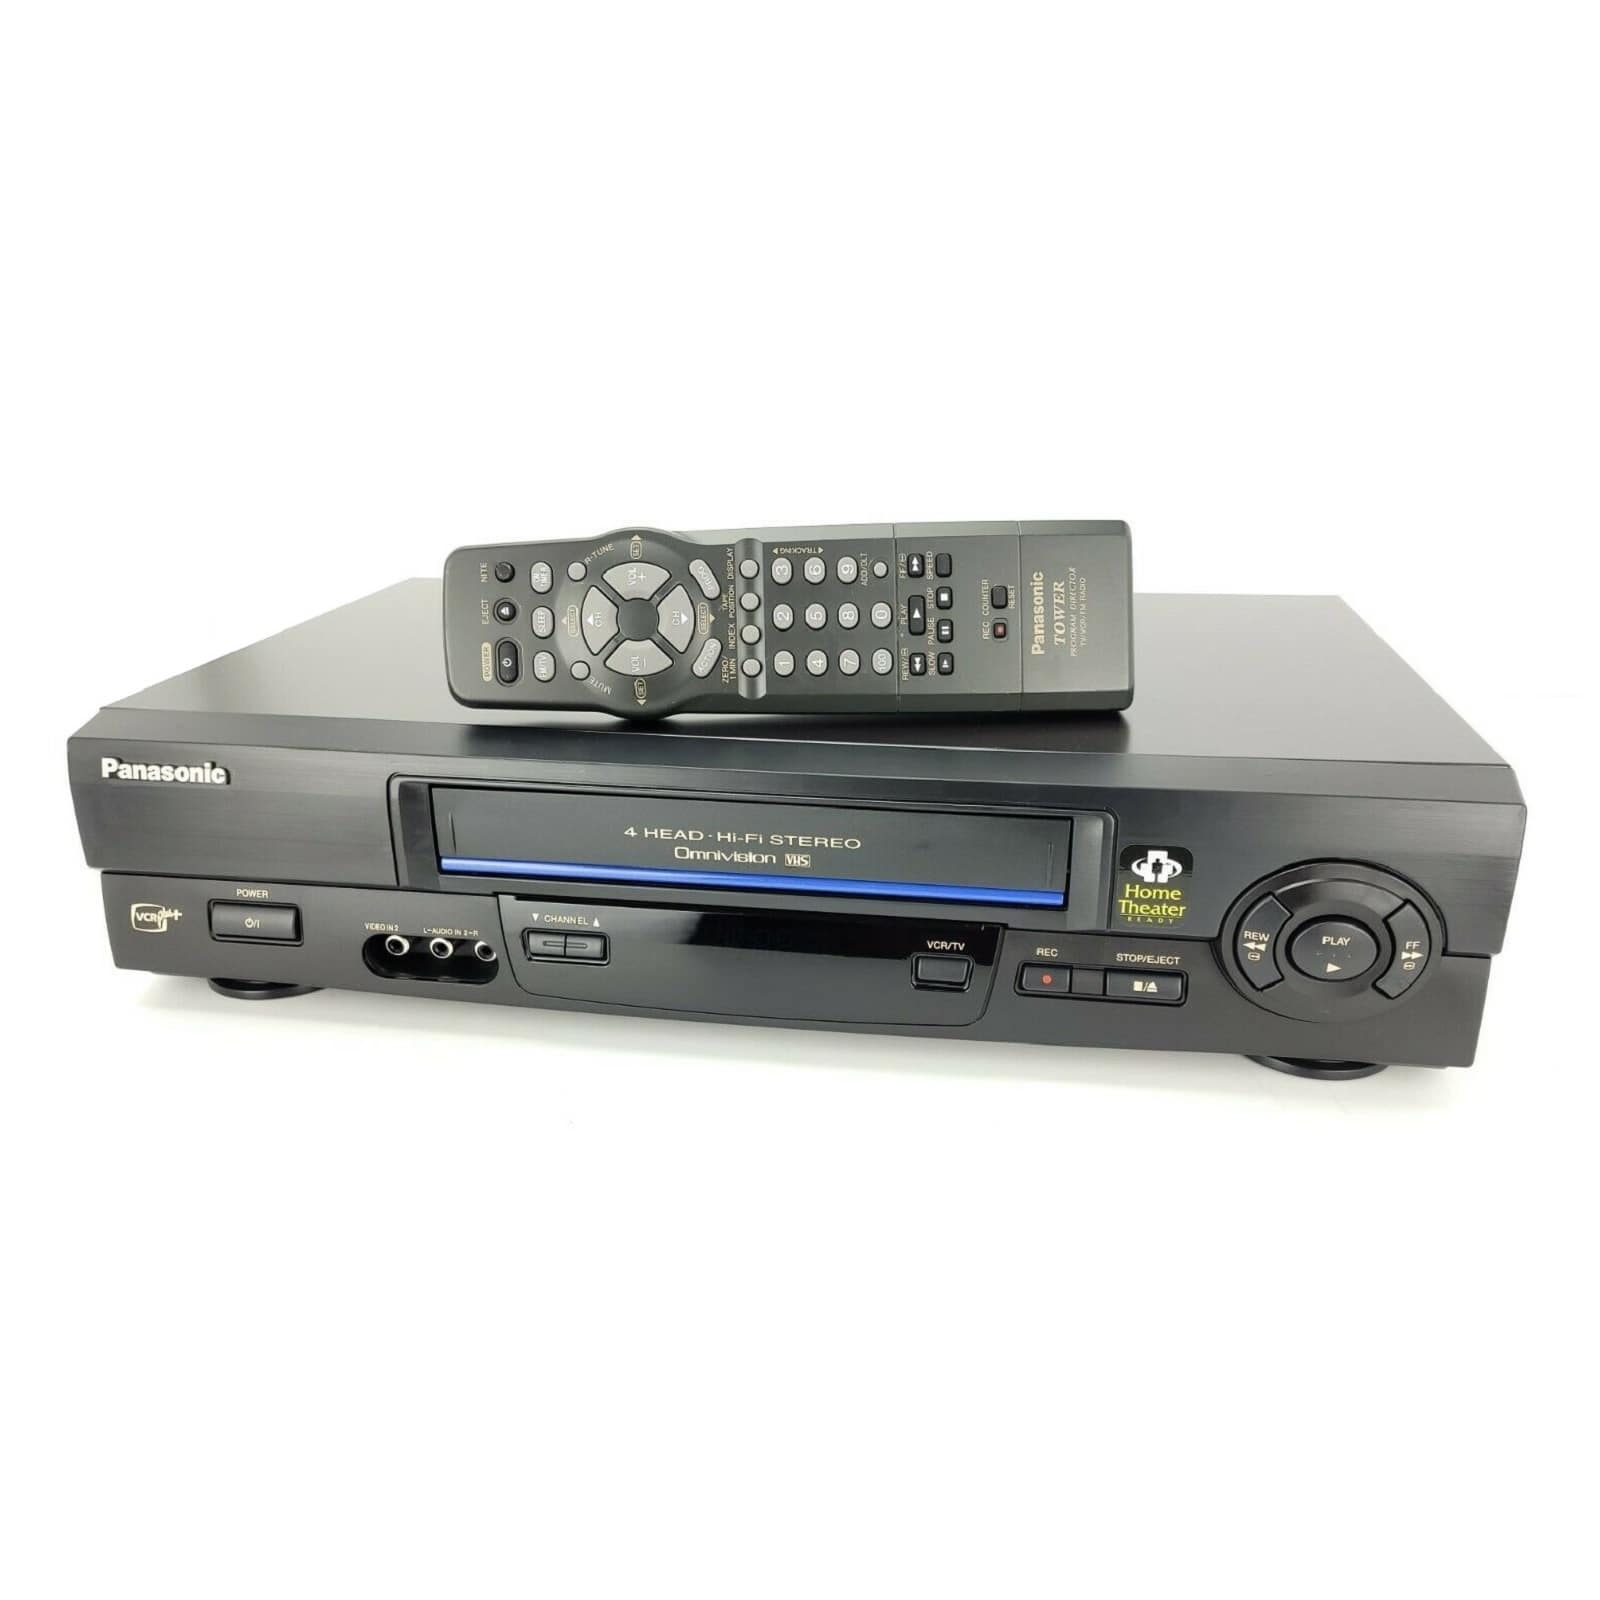 Panasonic VCR 4-Head Hi-Fi Stereo Player PV-V4611